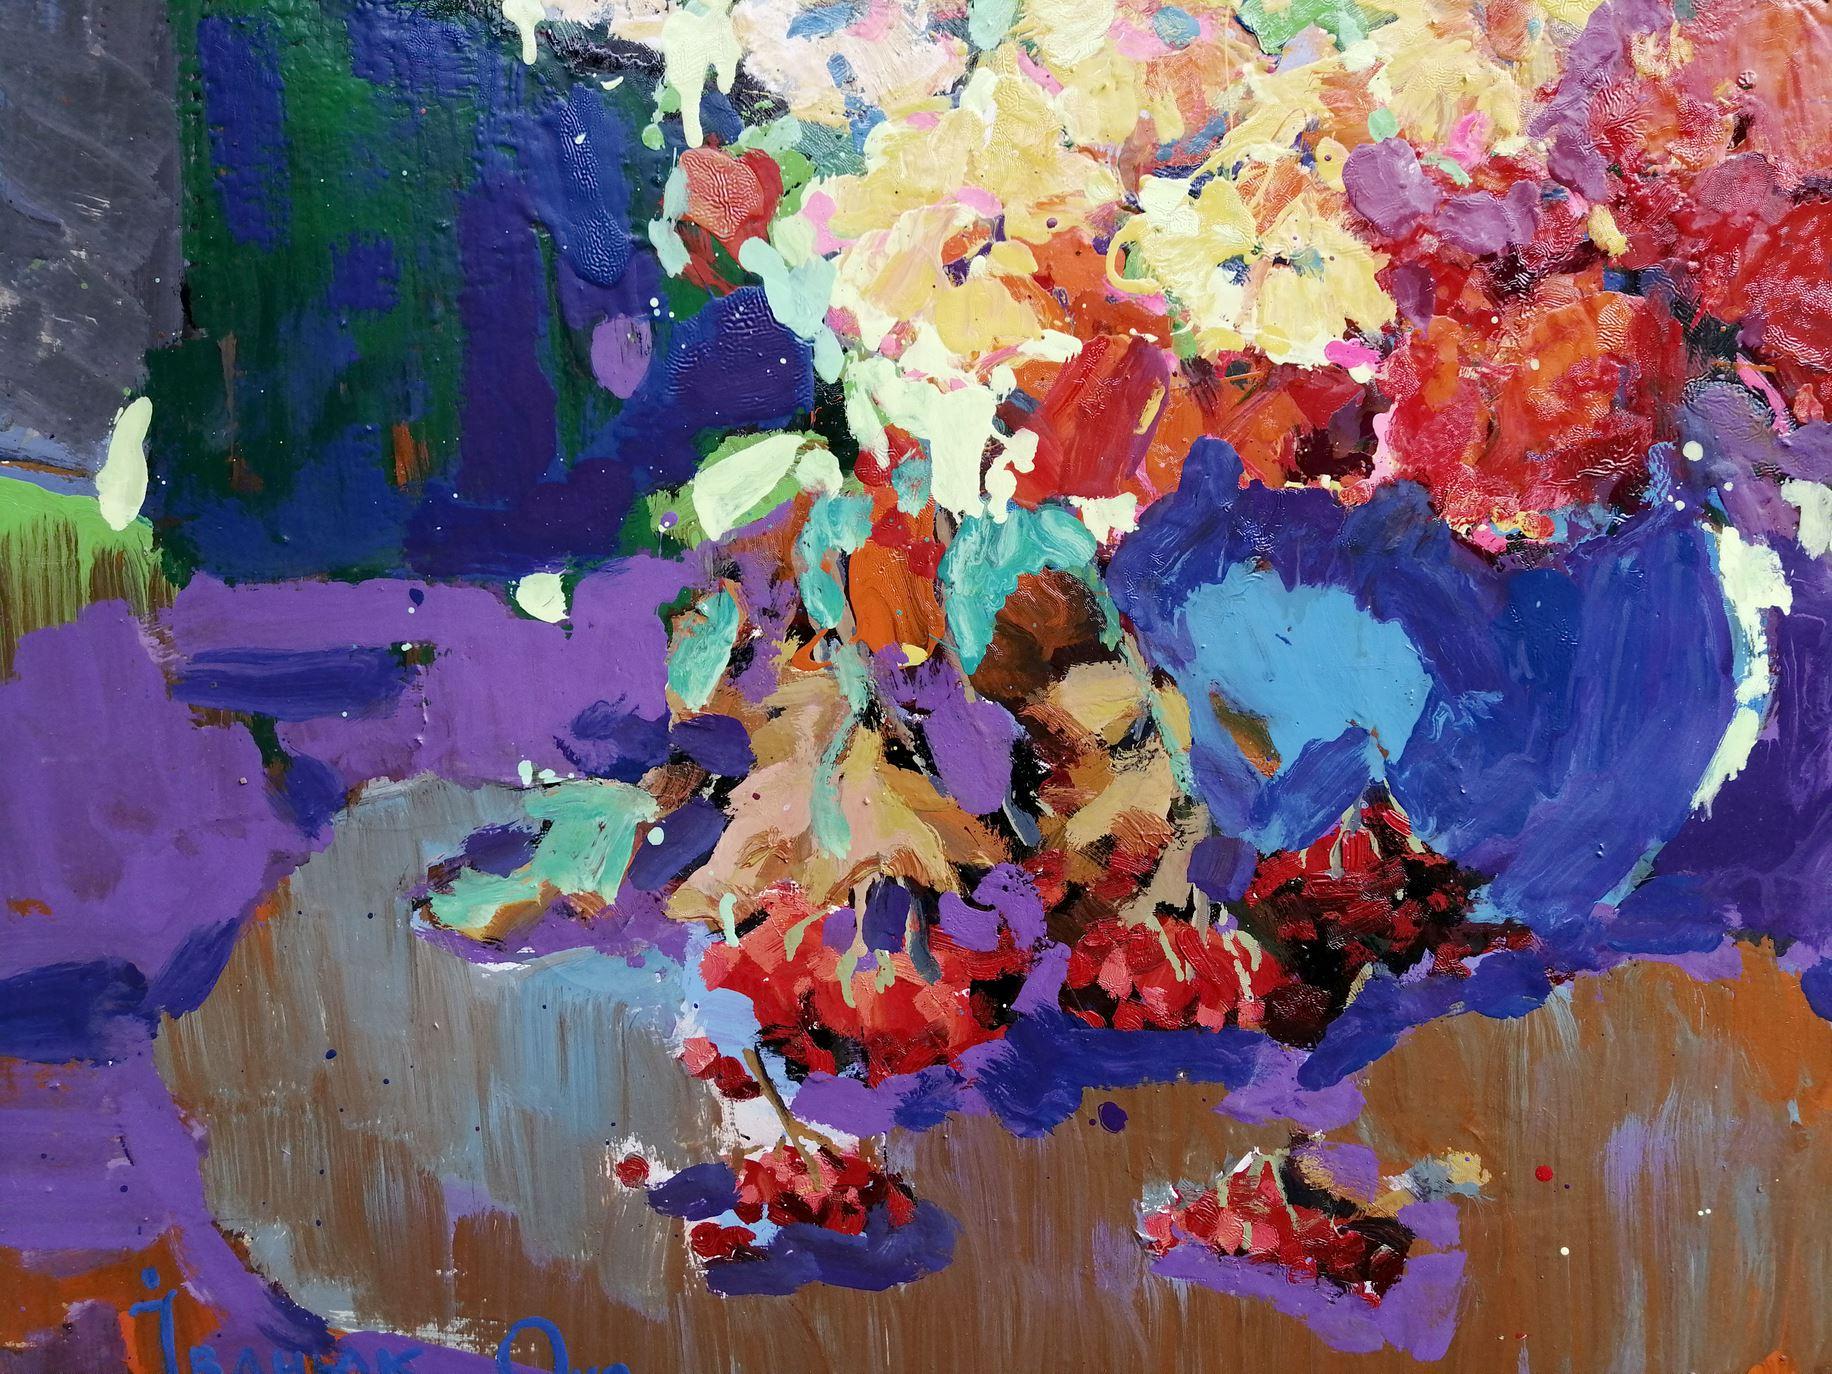 Artist: Alex Kalenyuk 
Work: Original oil painting, handmade artwork, one of a kind 
Medium: Oil on canvas 
Year: 2018
Style: Impressionism
Title: Autumn Flowers, 
Size: 39.5